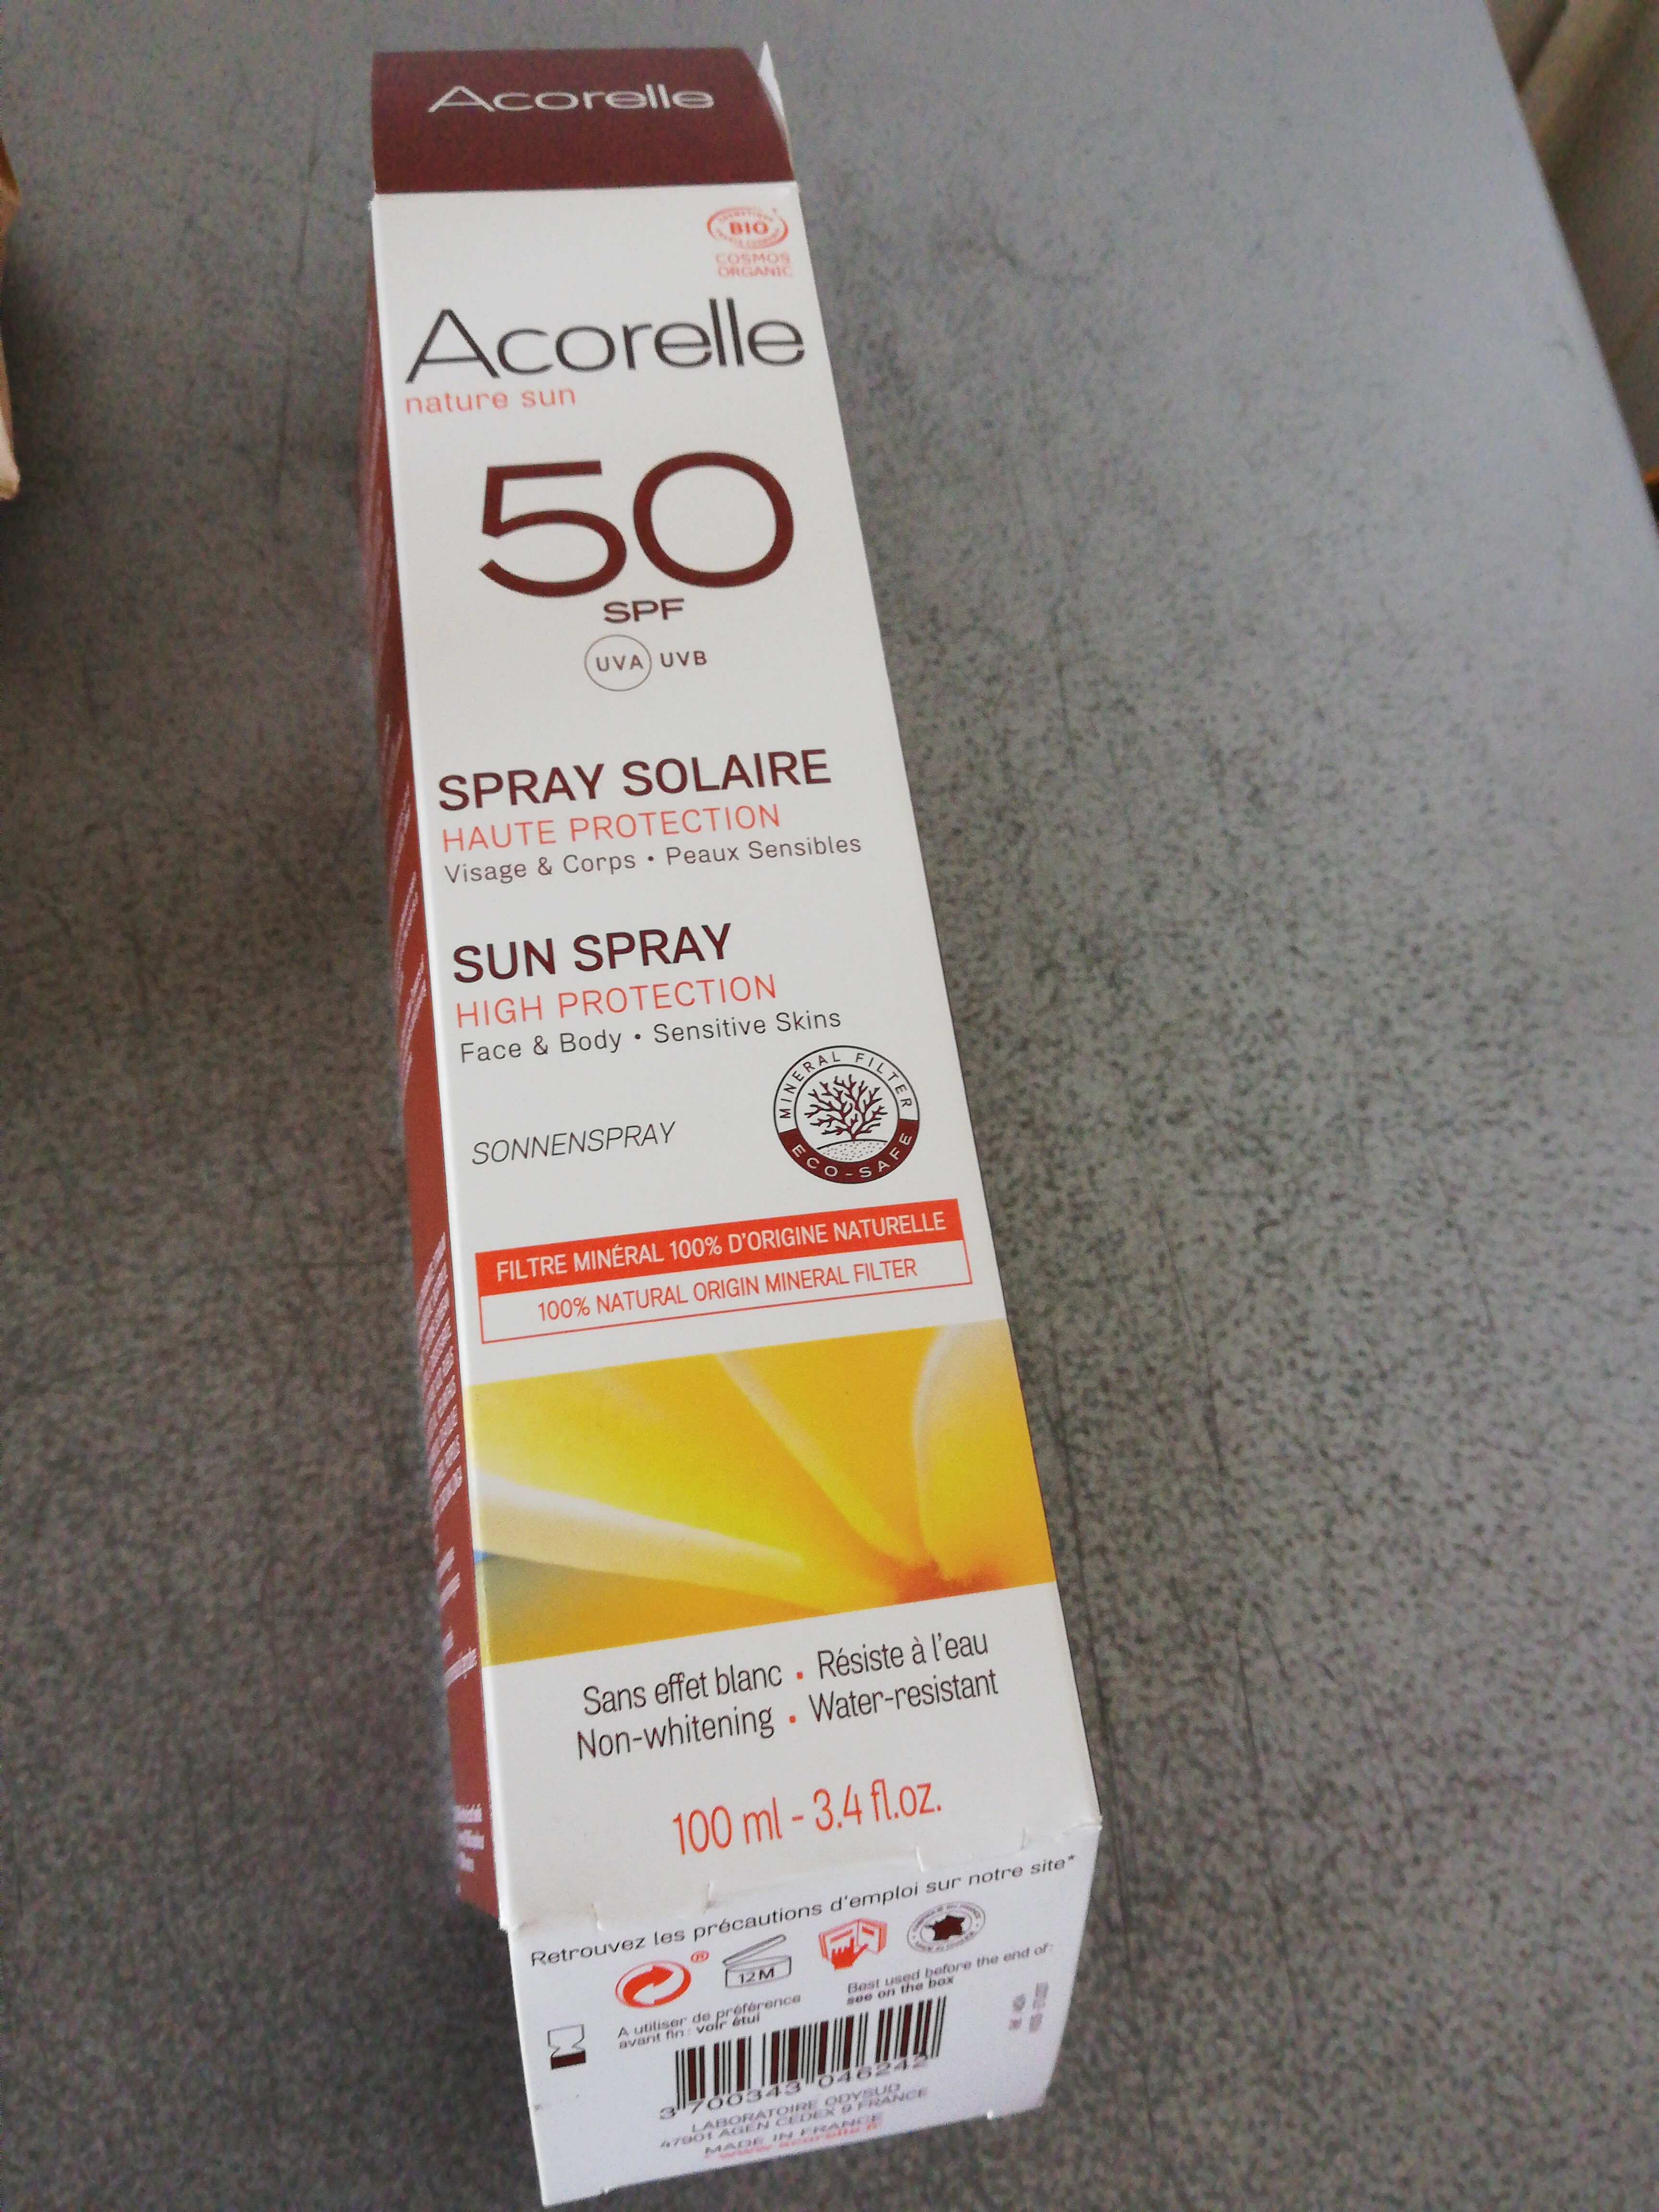 spray solaire visage et corps 50 SFP - Product - fr